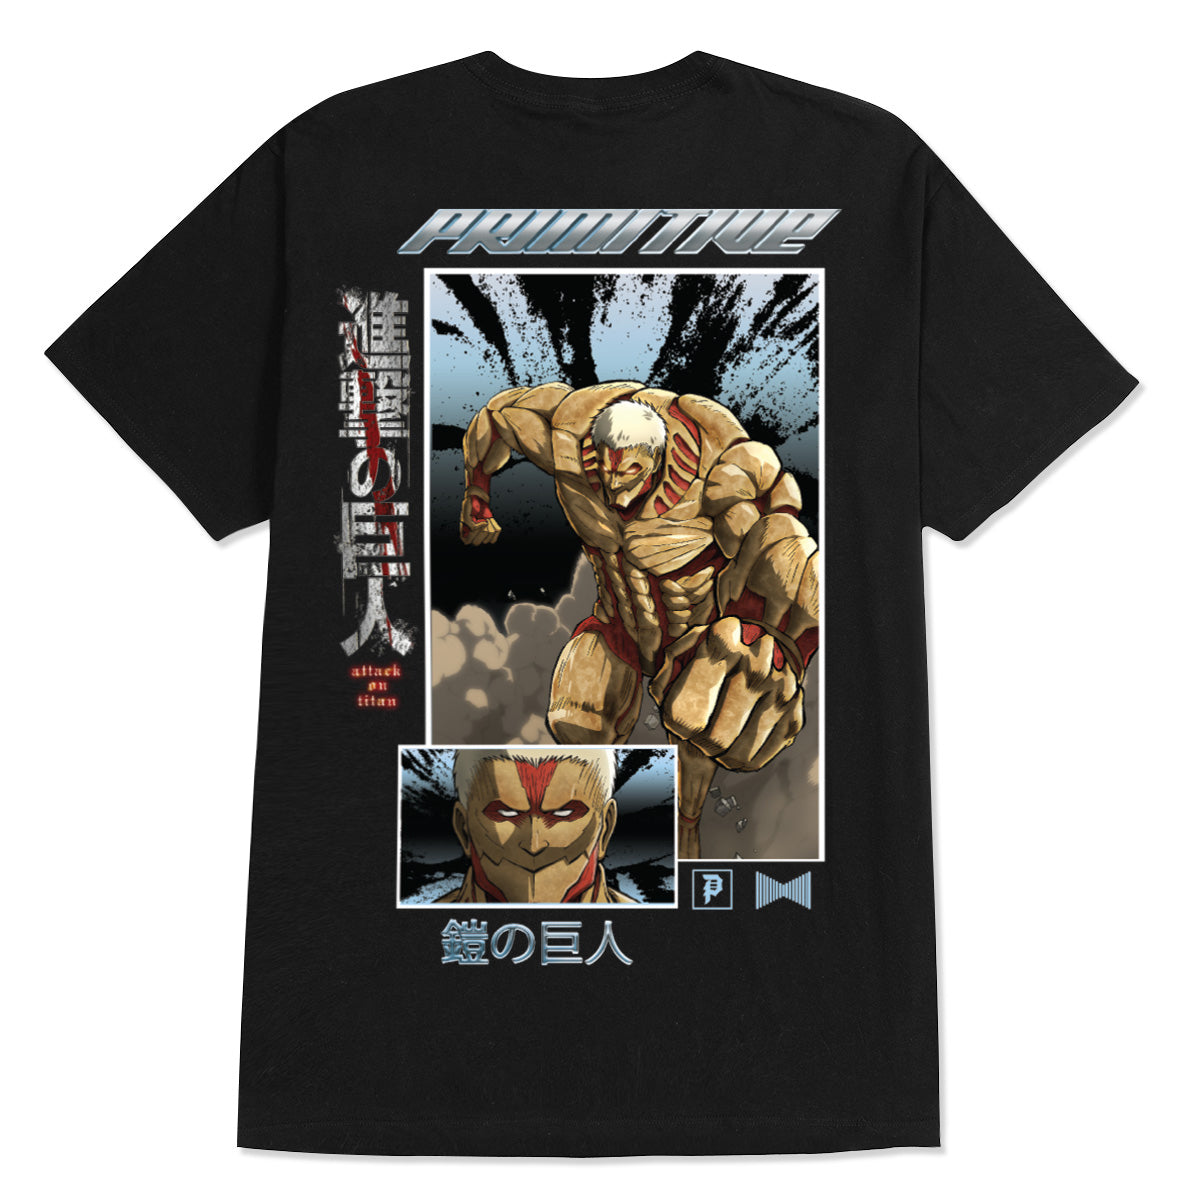 Primitive x Titans Armored Hw T-Shirt - Black image 1